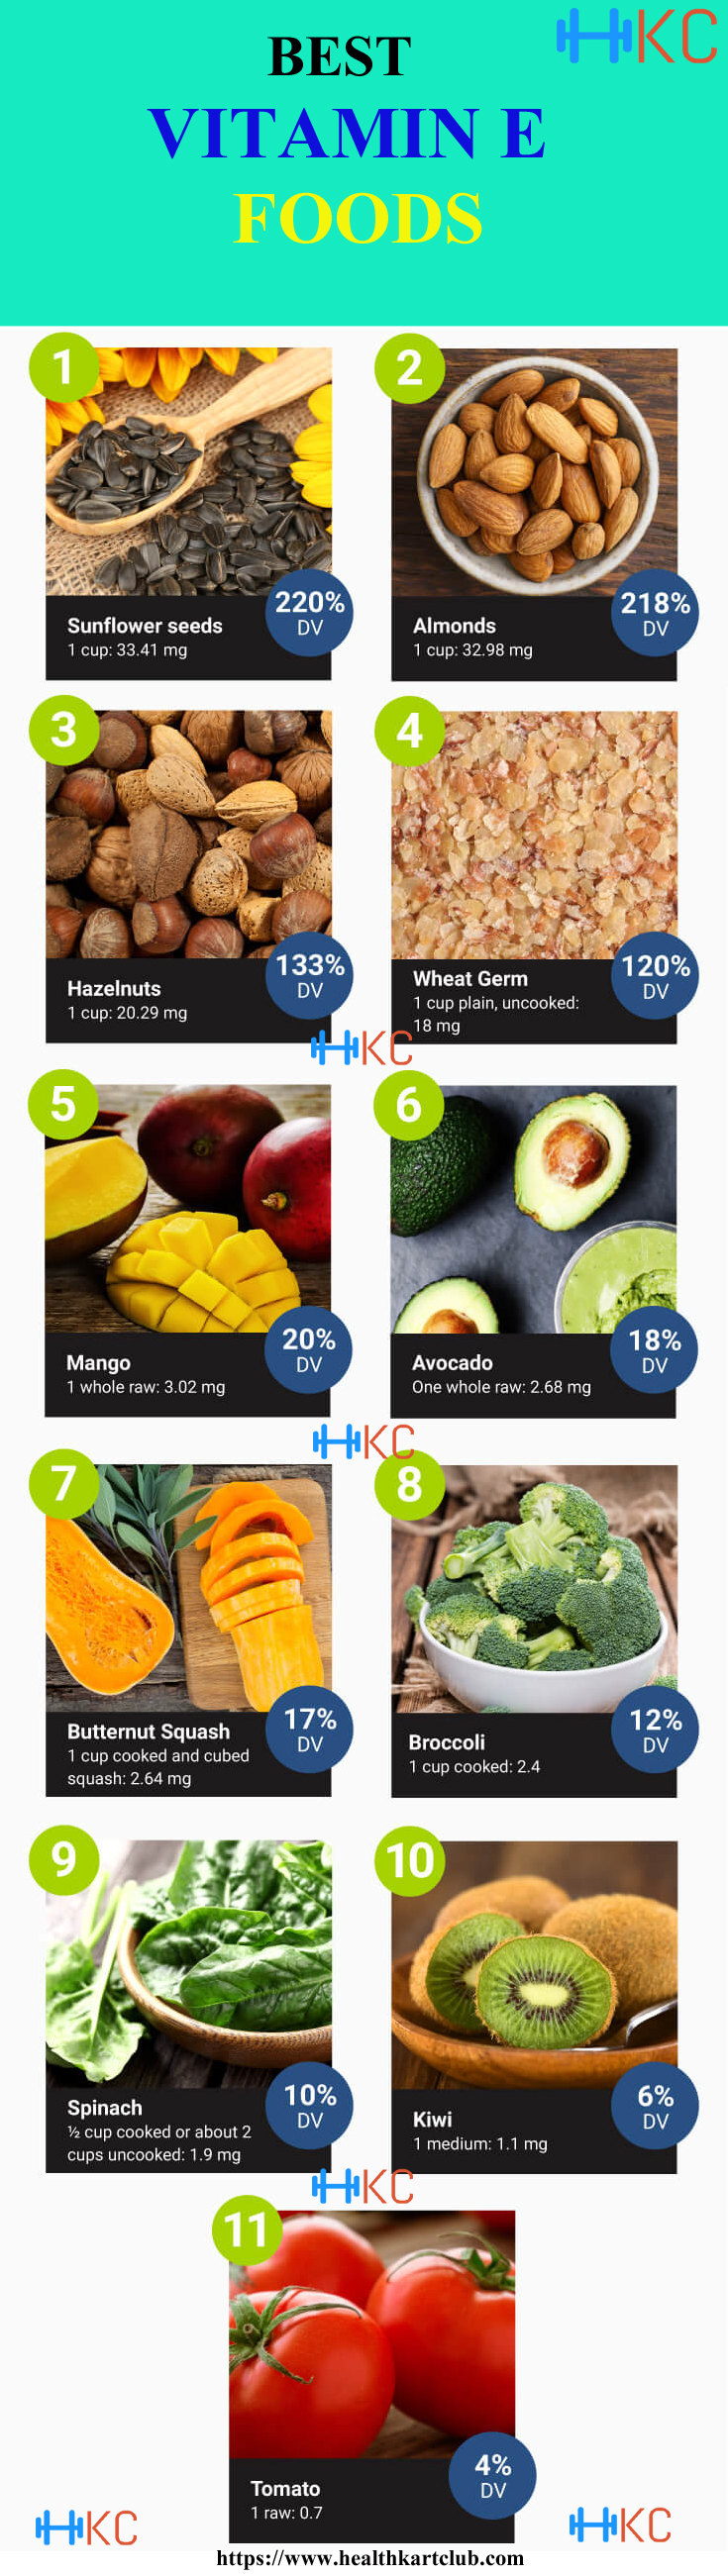 Top 10 Vitamin E Foods List